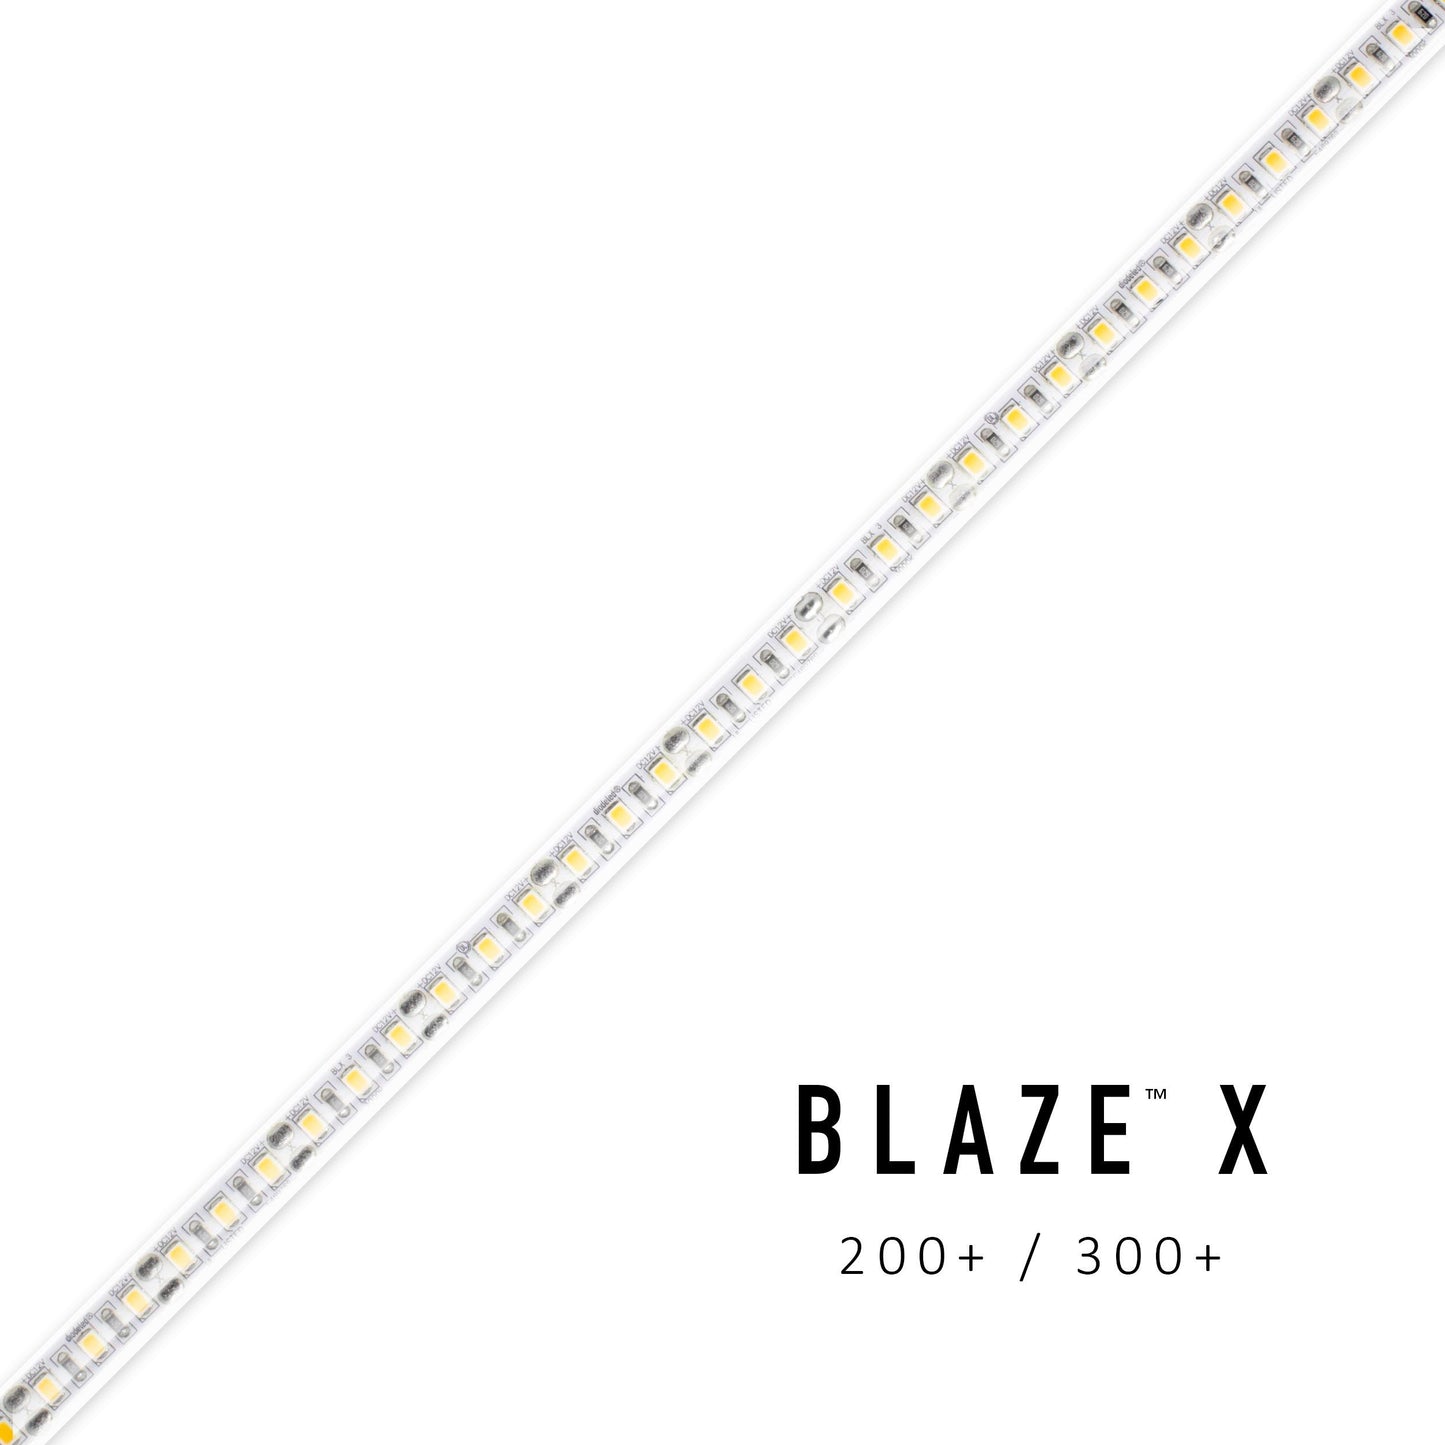 Diode LED DI-12V-BLX2-35-W016 16.4ft Spool Blaze X 200+ Lumen Per Foot Wet Location LED Tape Light 3500K 12V DC